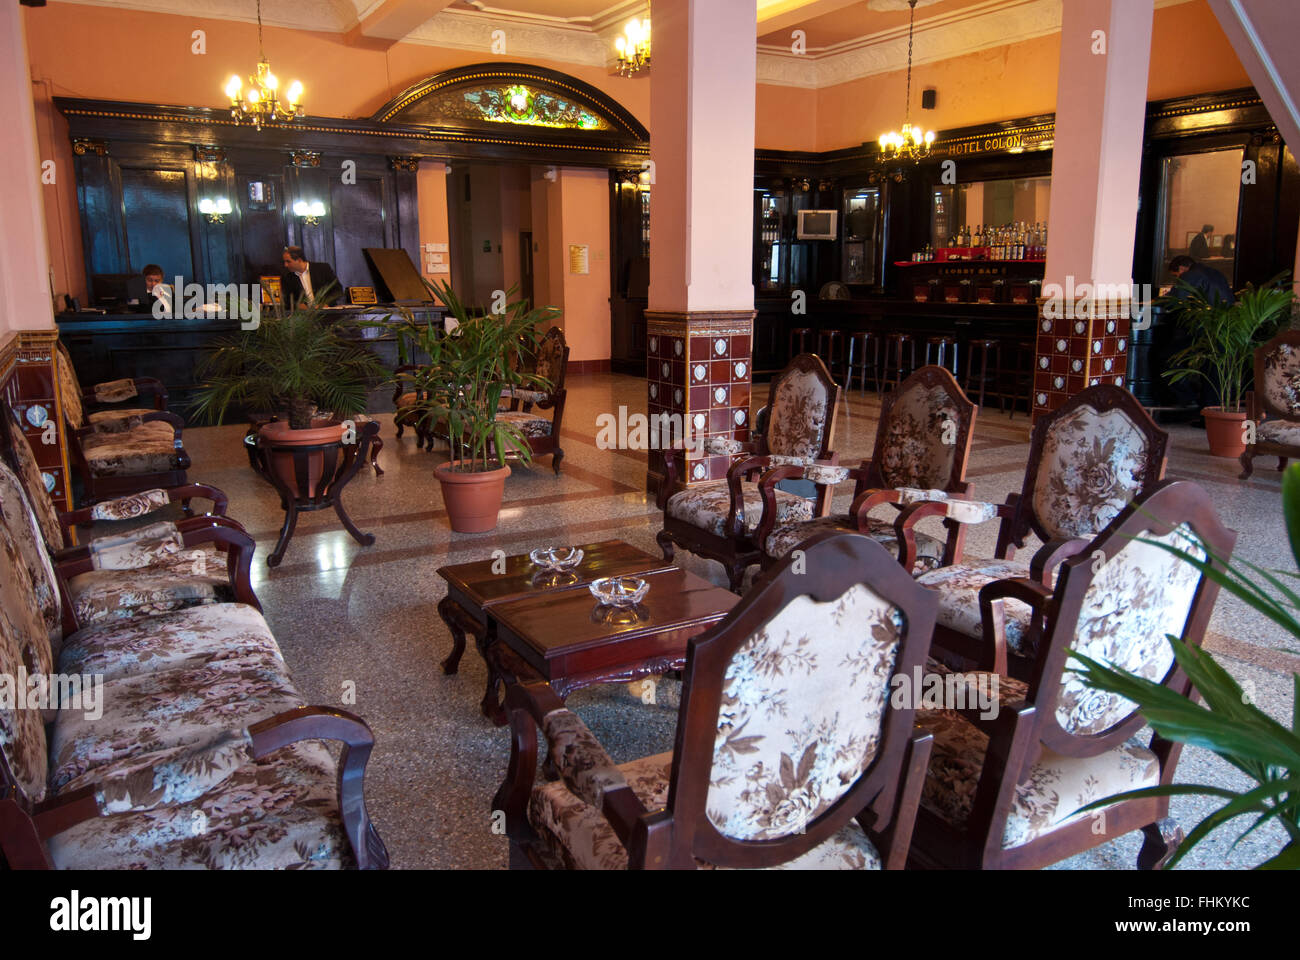 La lobby Izlazul Hotel Colon, storico spanisch edificio coloniale, Camagüey, Cuba Foto Stock